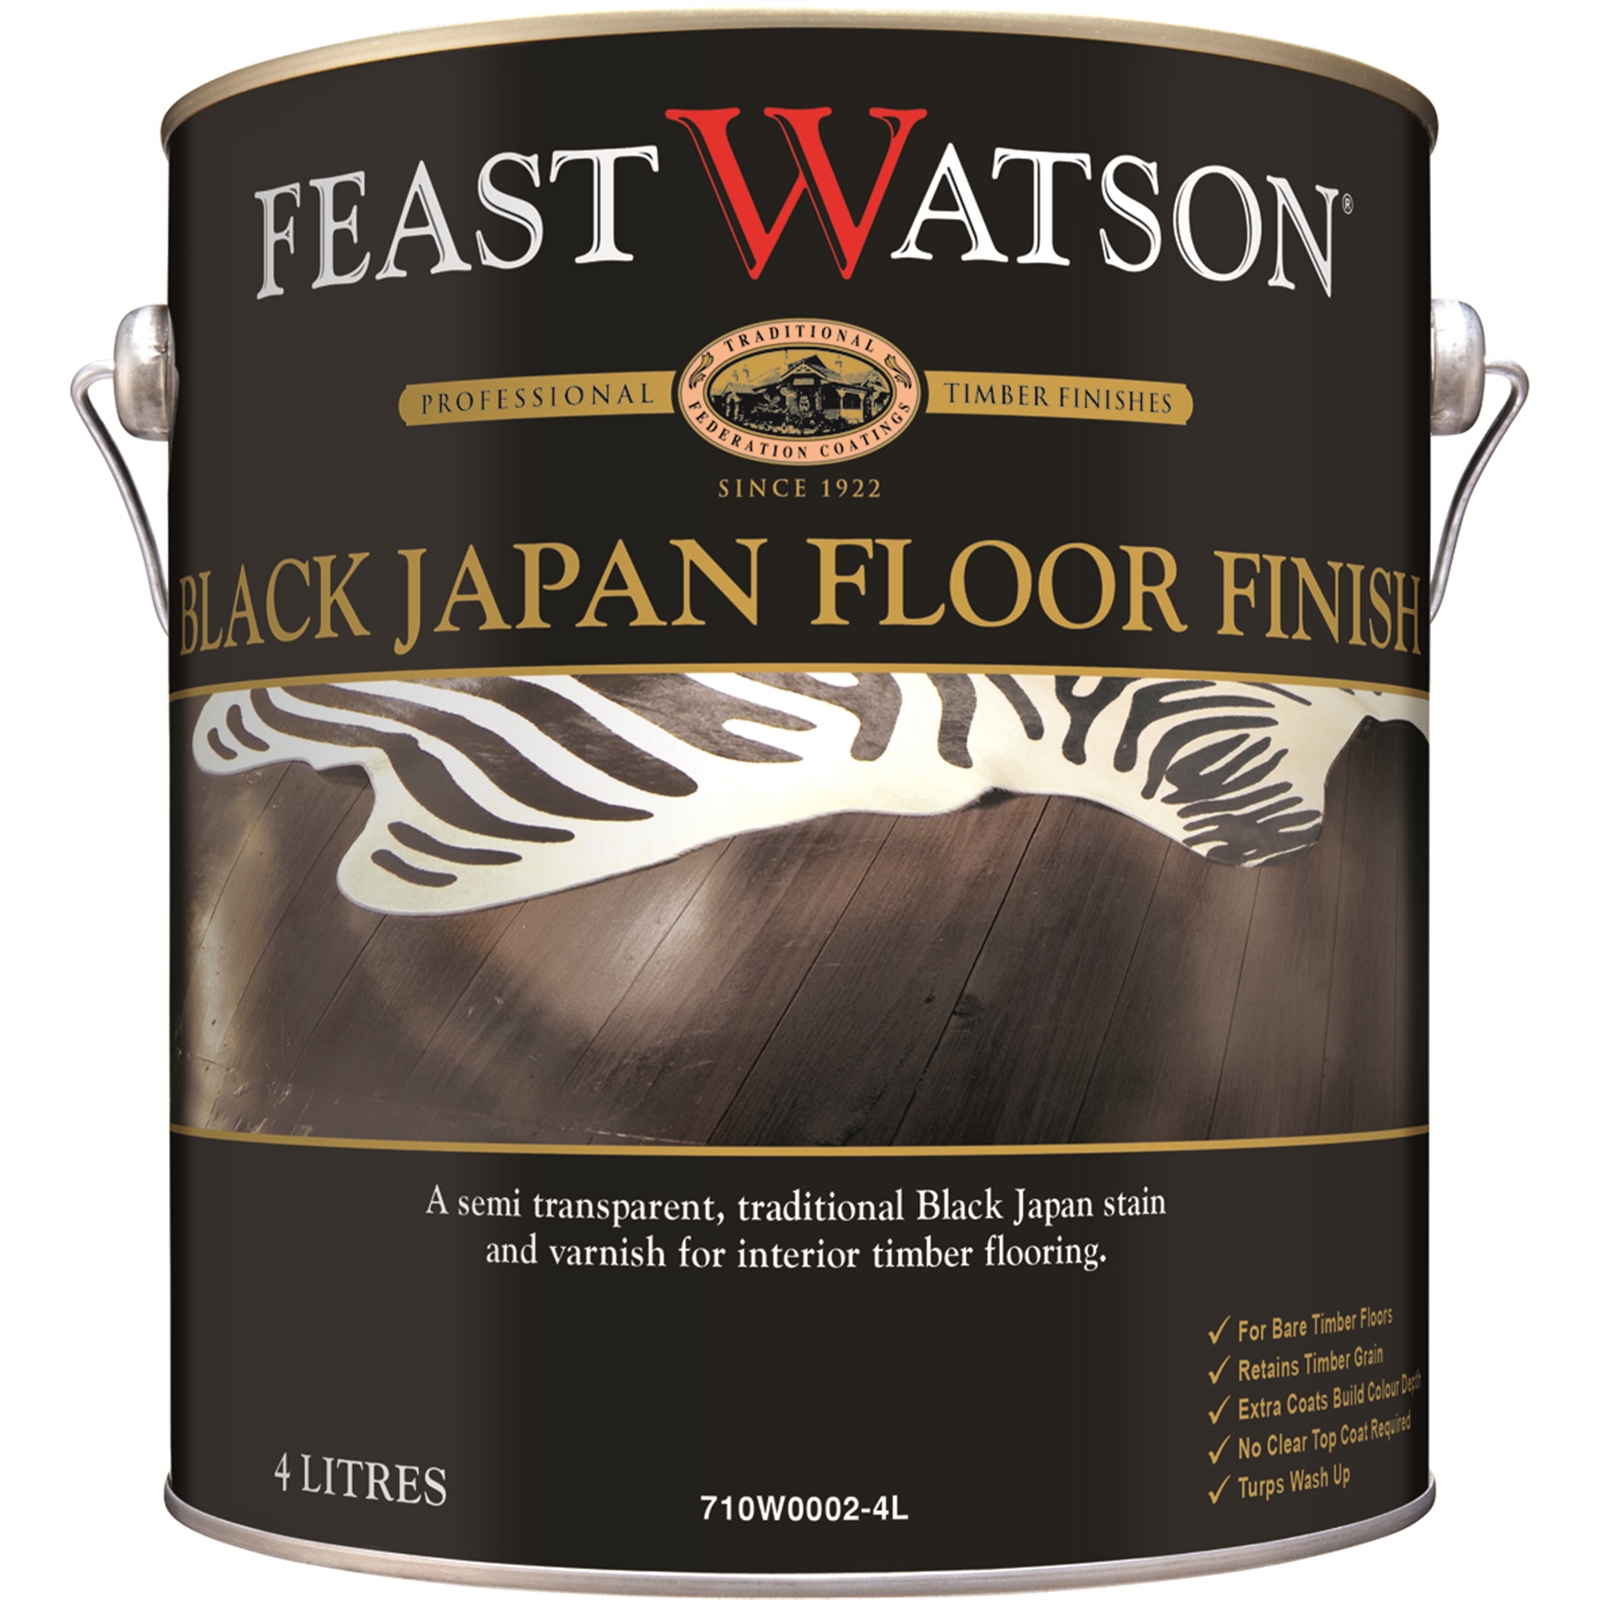 Feast Watson 4L Black Japan Floor Finish